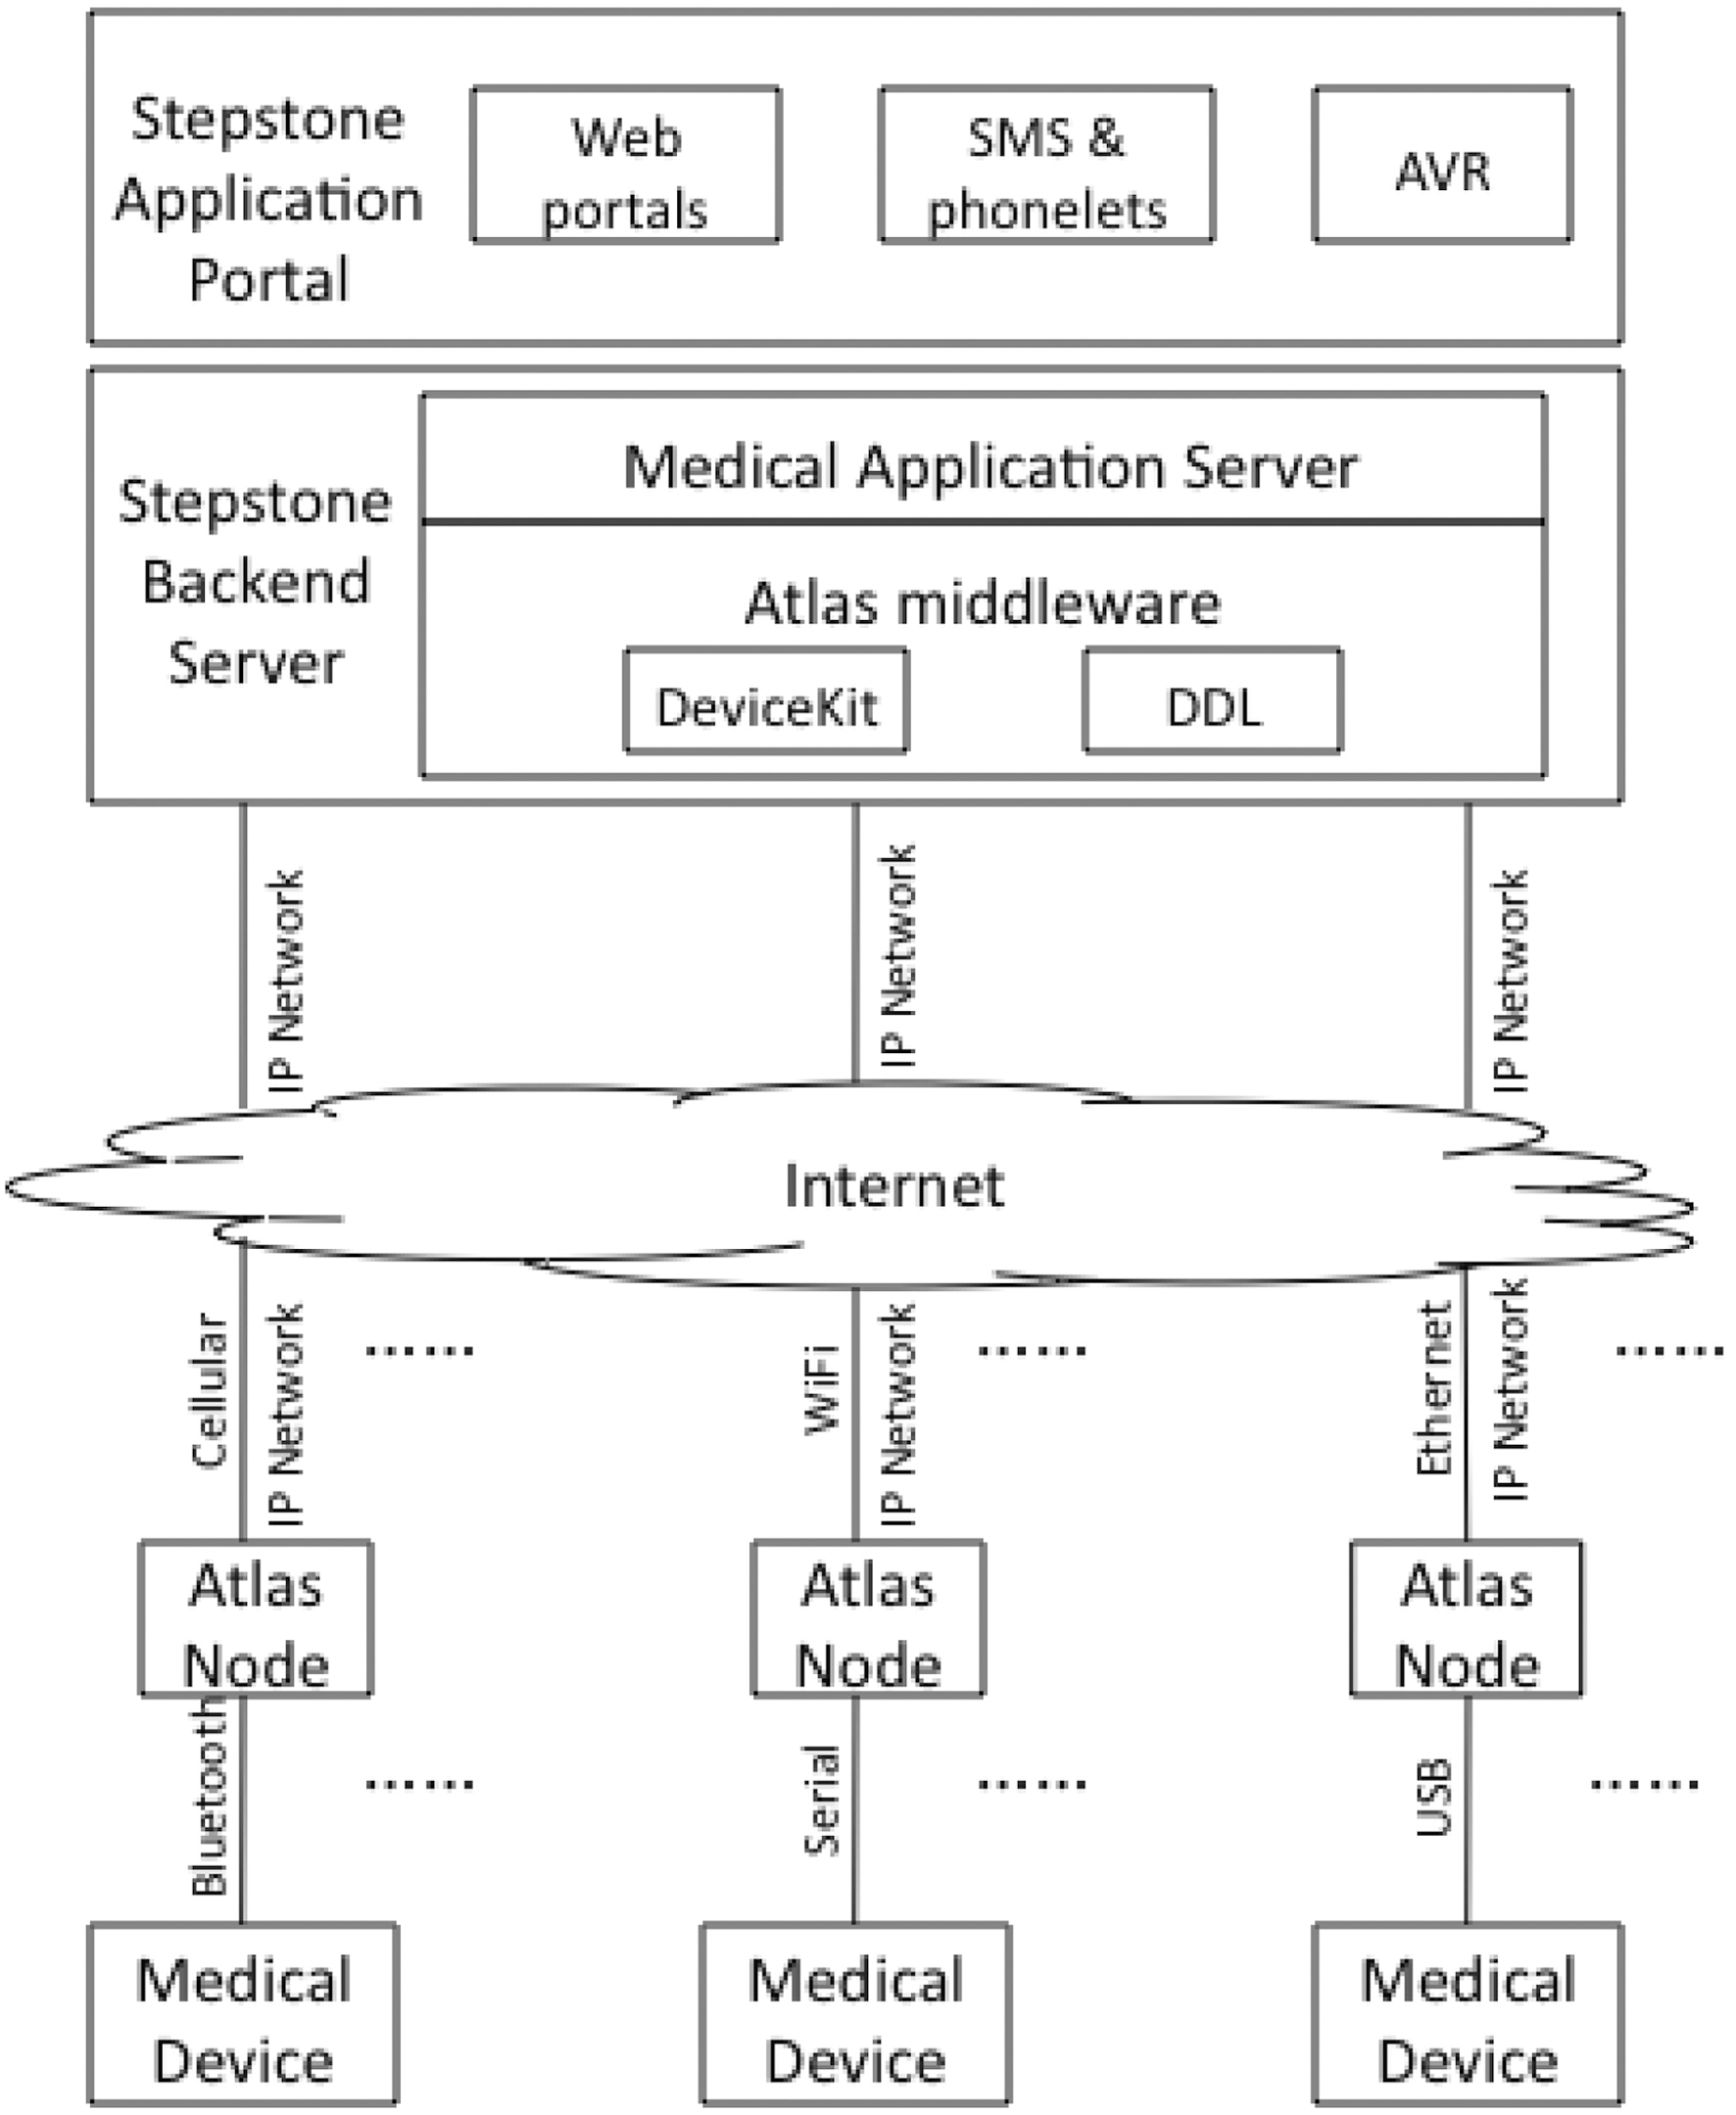 STEPSTONE system architecture. AVR: automated voice responseDDL: Device Description Language.